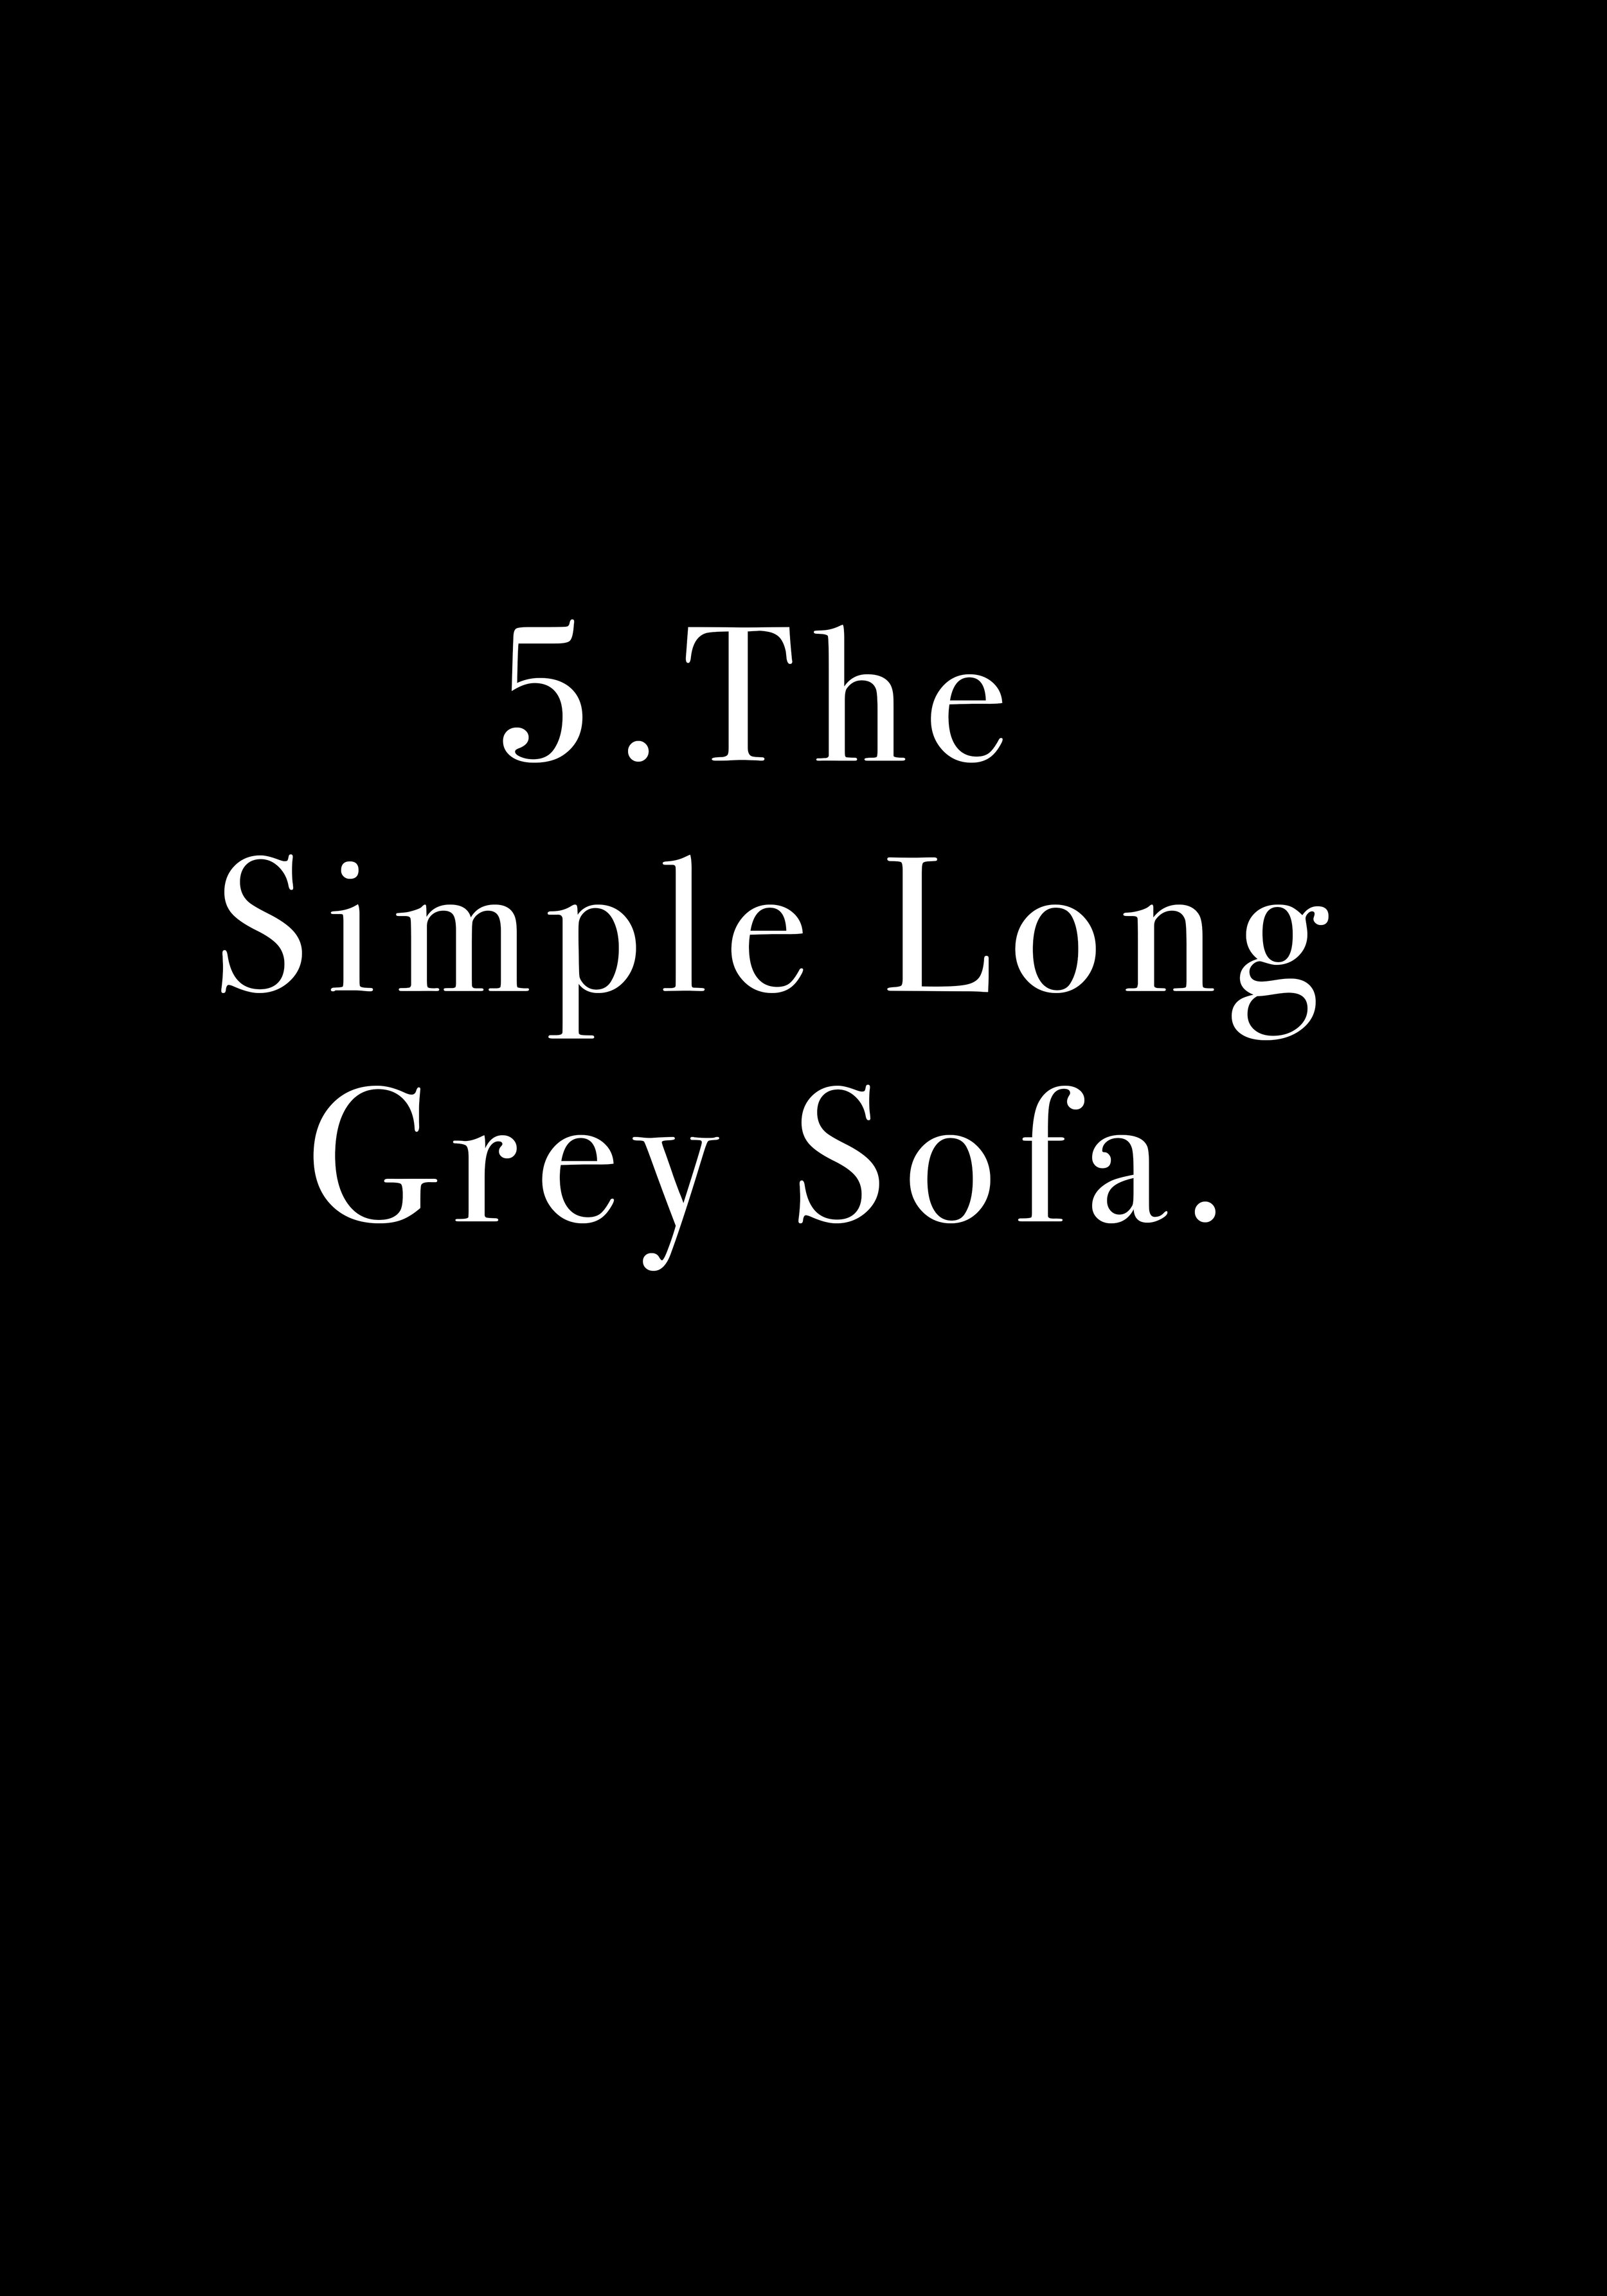 Grey sofa words-1.jpg